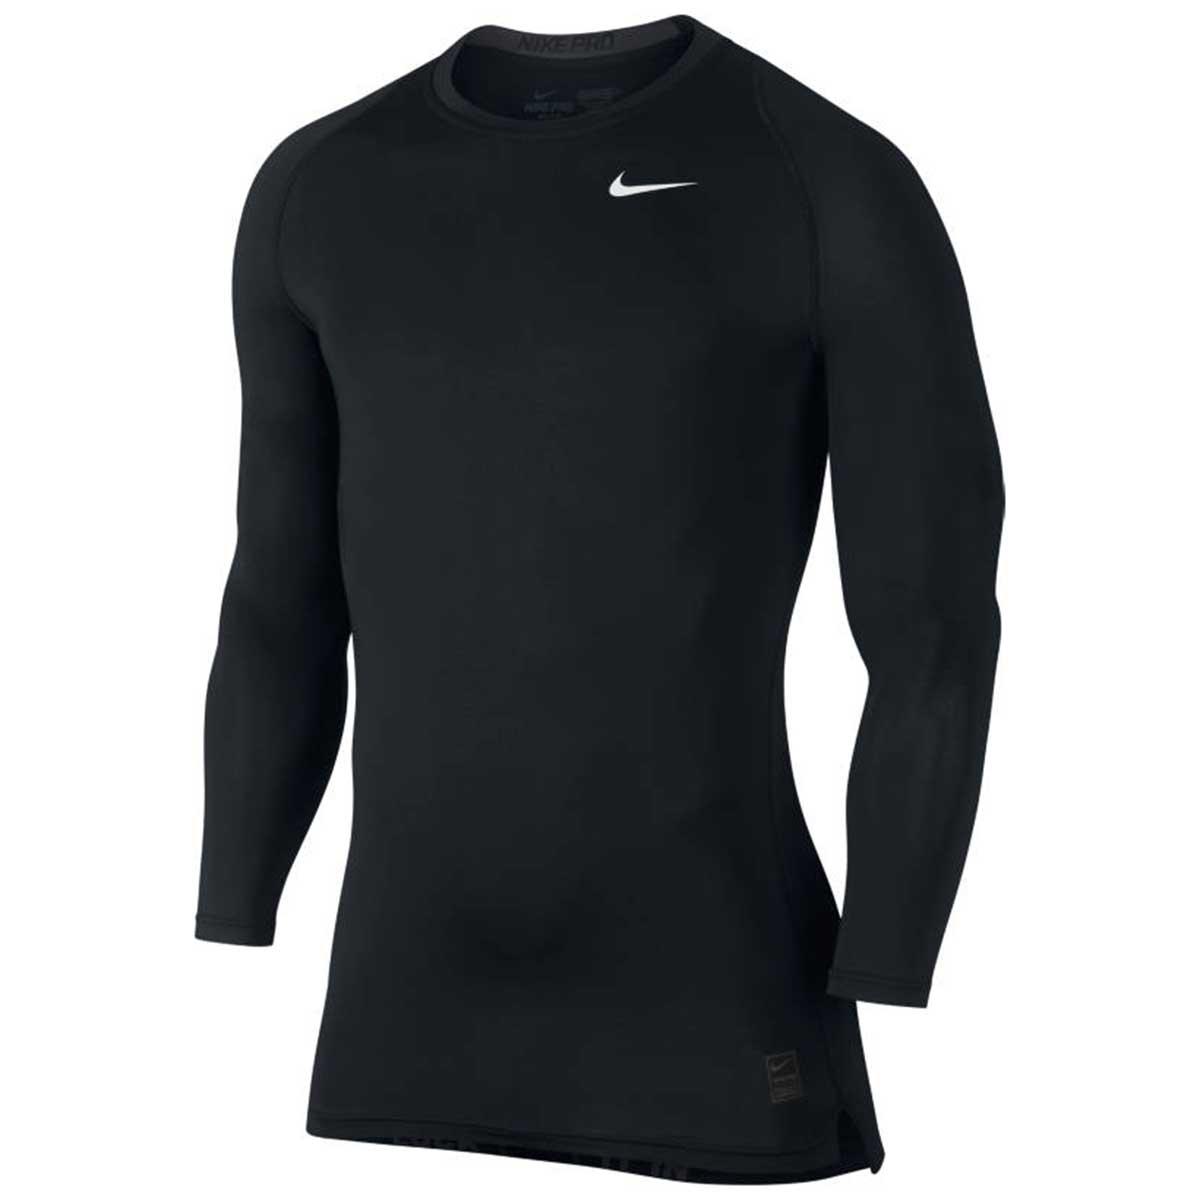 Buy Nike Pro Combat Long Sleeve Top (Black) Online India